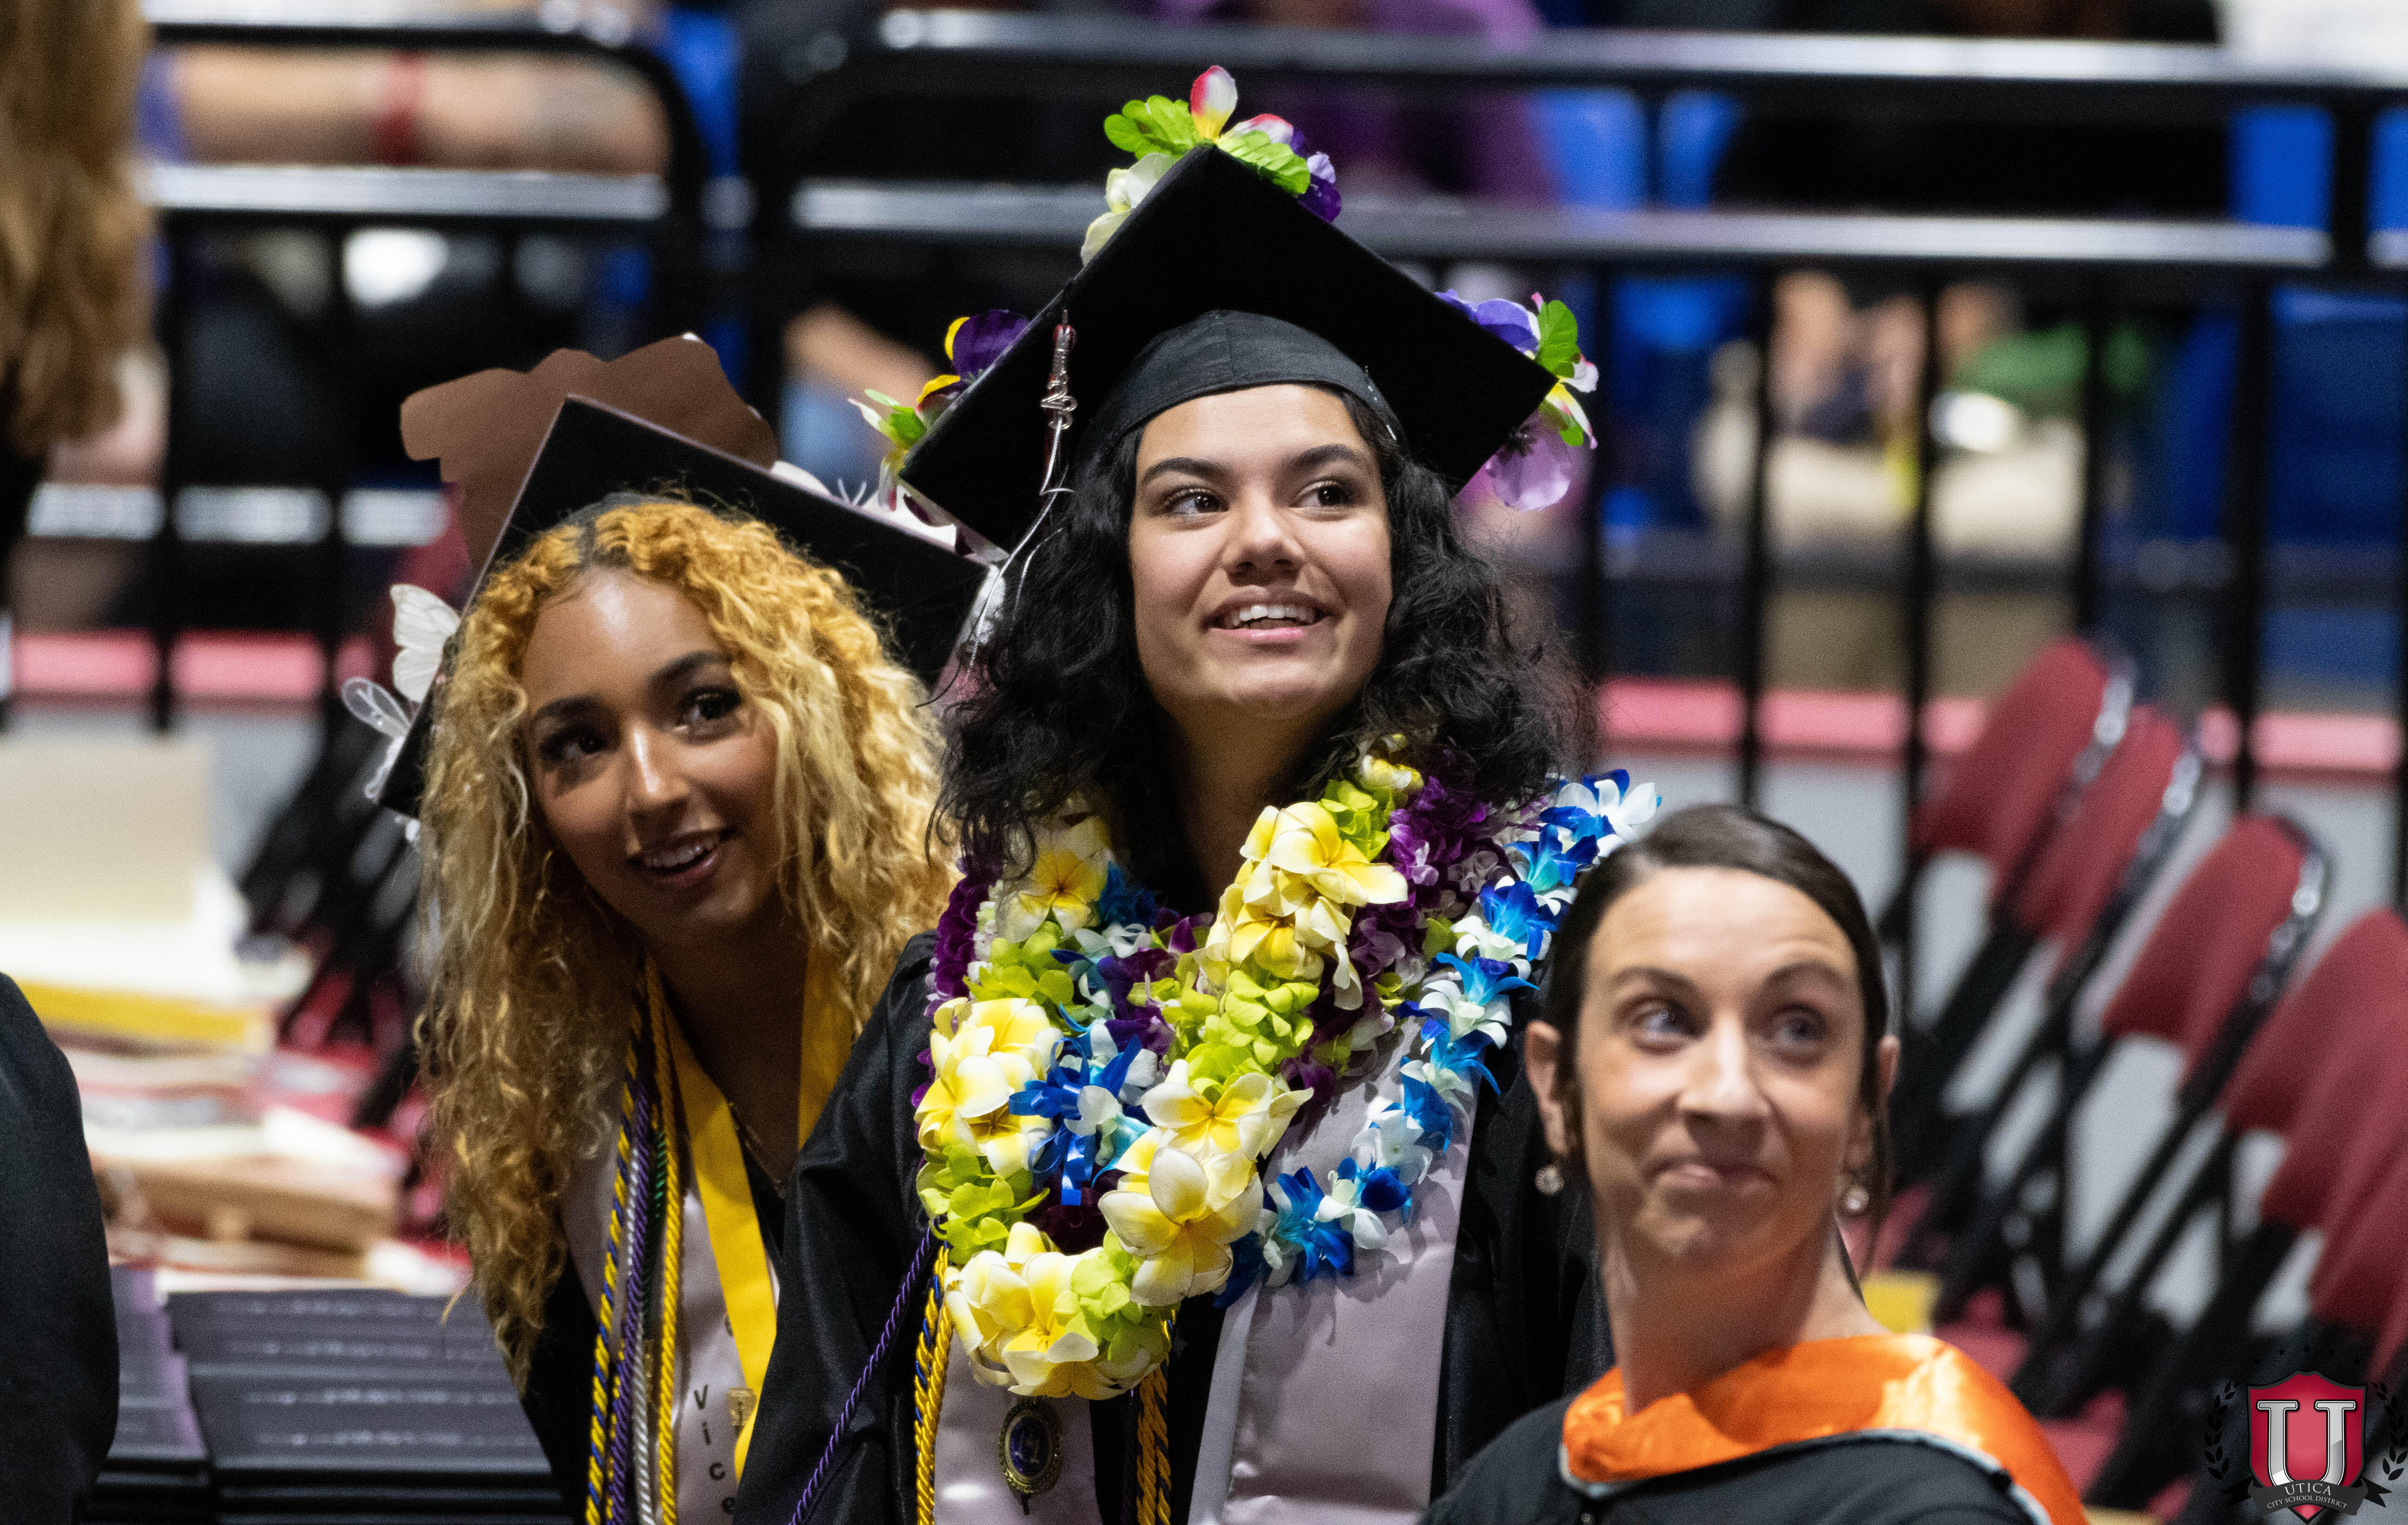 Graduates smiling standing together